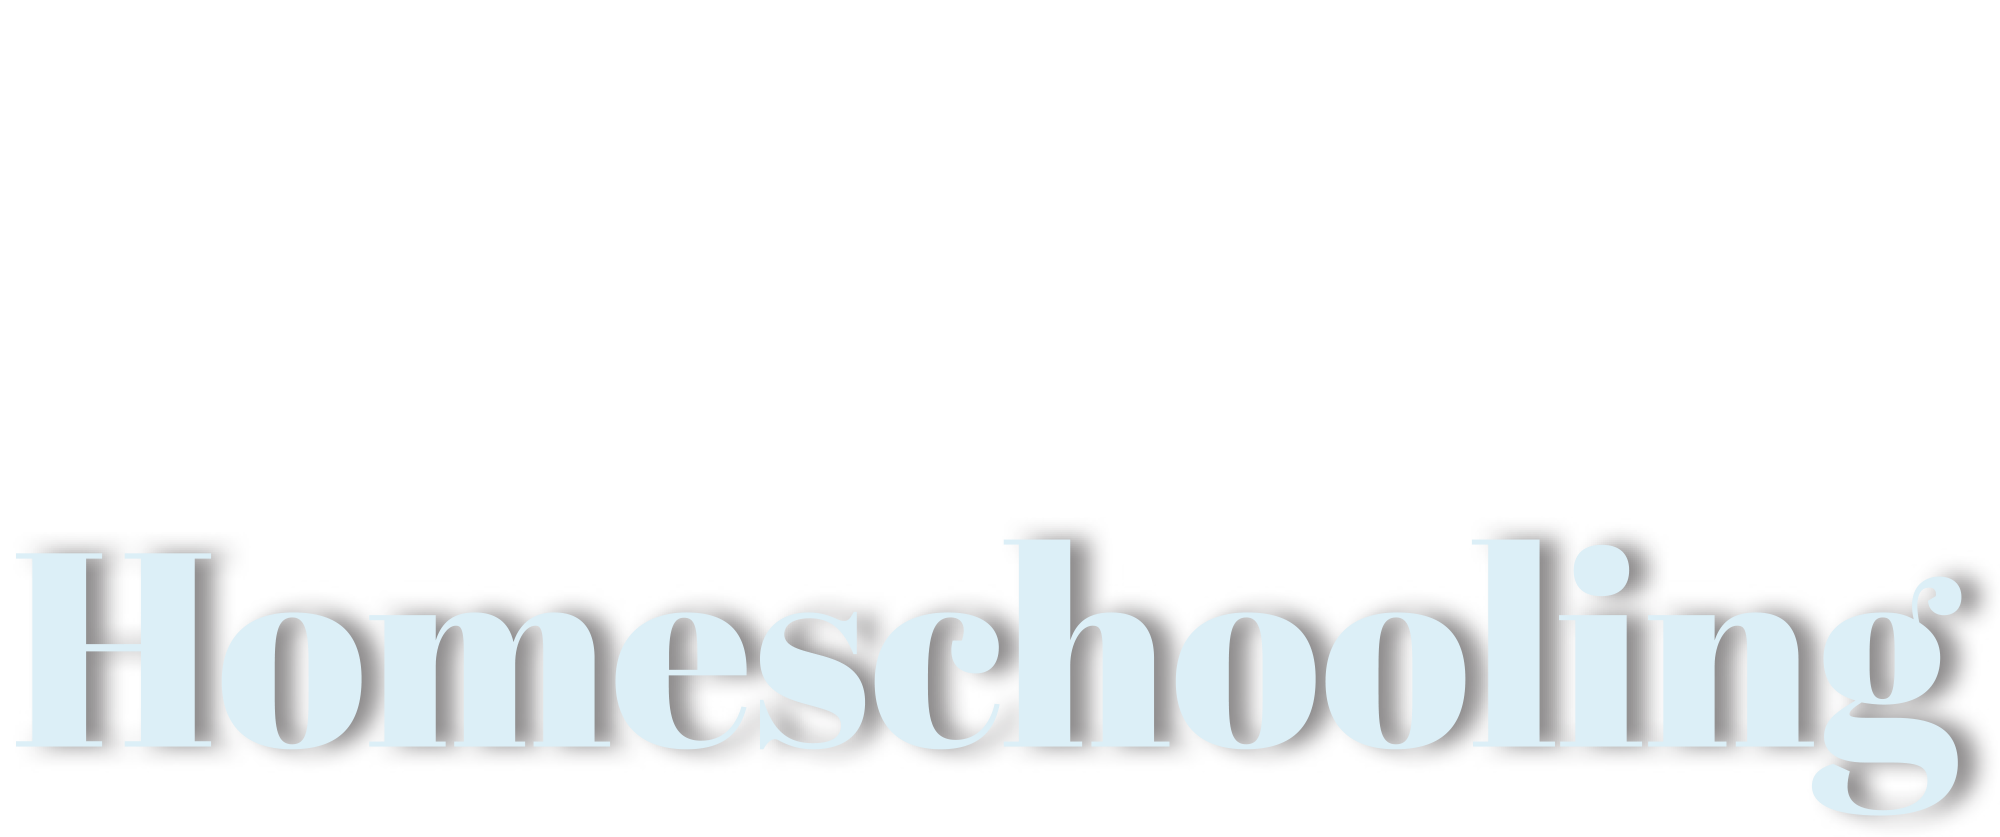 Real-Life Homeschooling typography